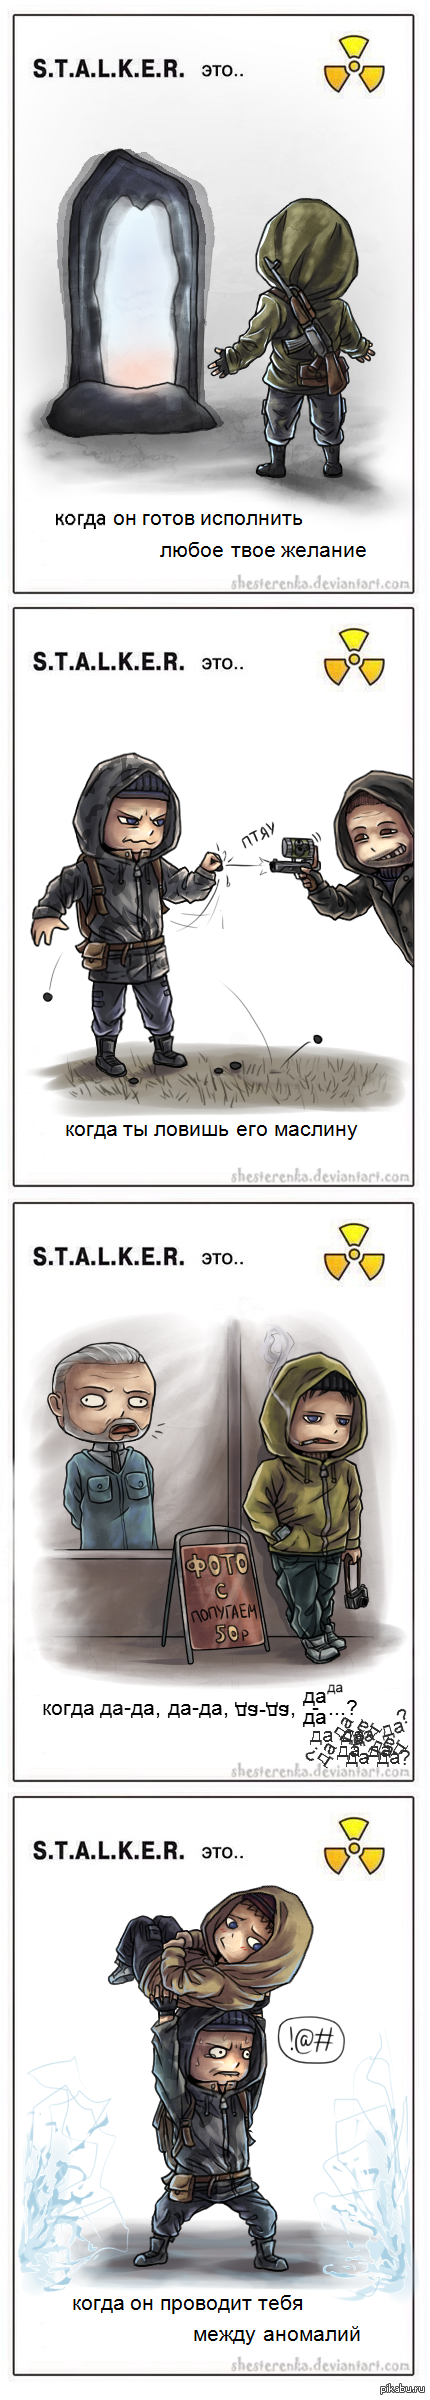 S.T.A.L.K.E.R. ...  2     ,  )    1 - <a href="http://pikabu.ru/story/stalker_yeto_2718192">http://pikabu.ru/story/_2718192</a>